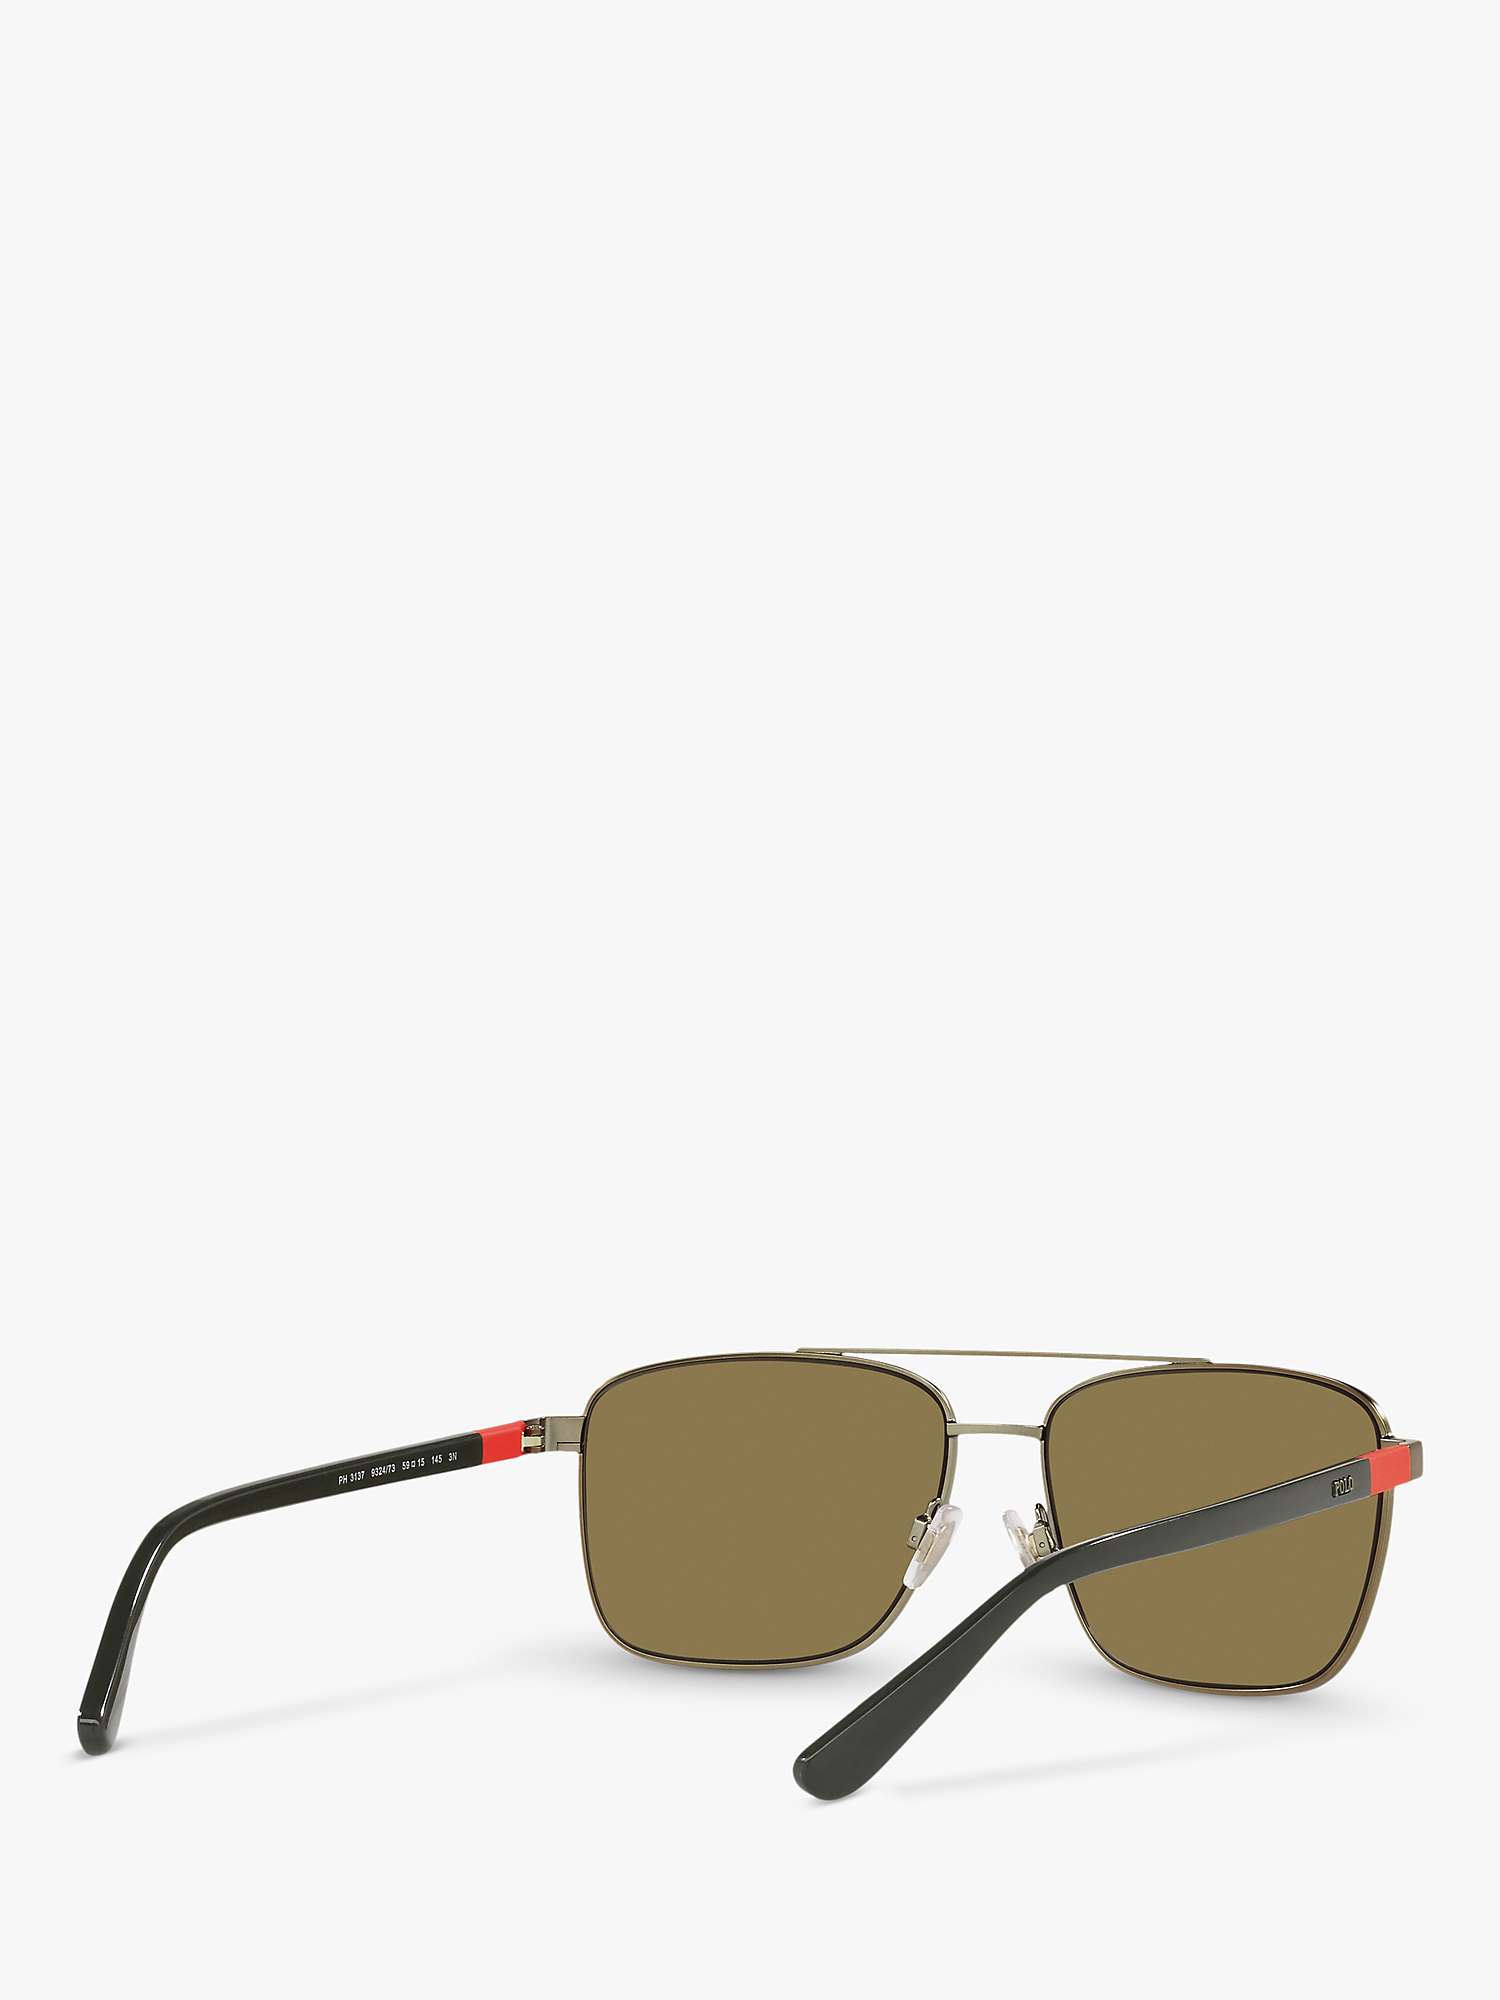 Buy Polo Ralph Lauren PH3137 Men's Rectangular Sunglasses, Gold/Green Online at johnlewis.com